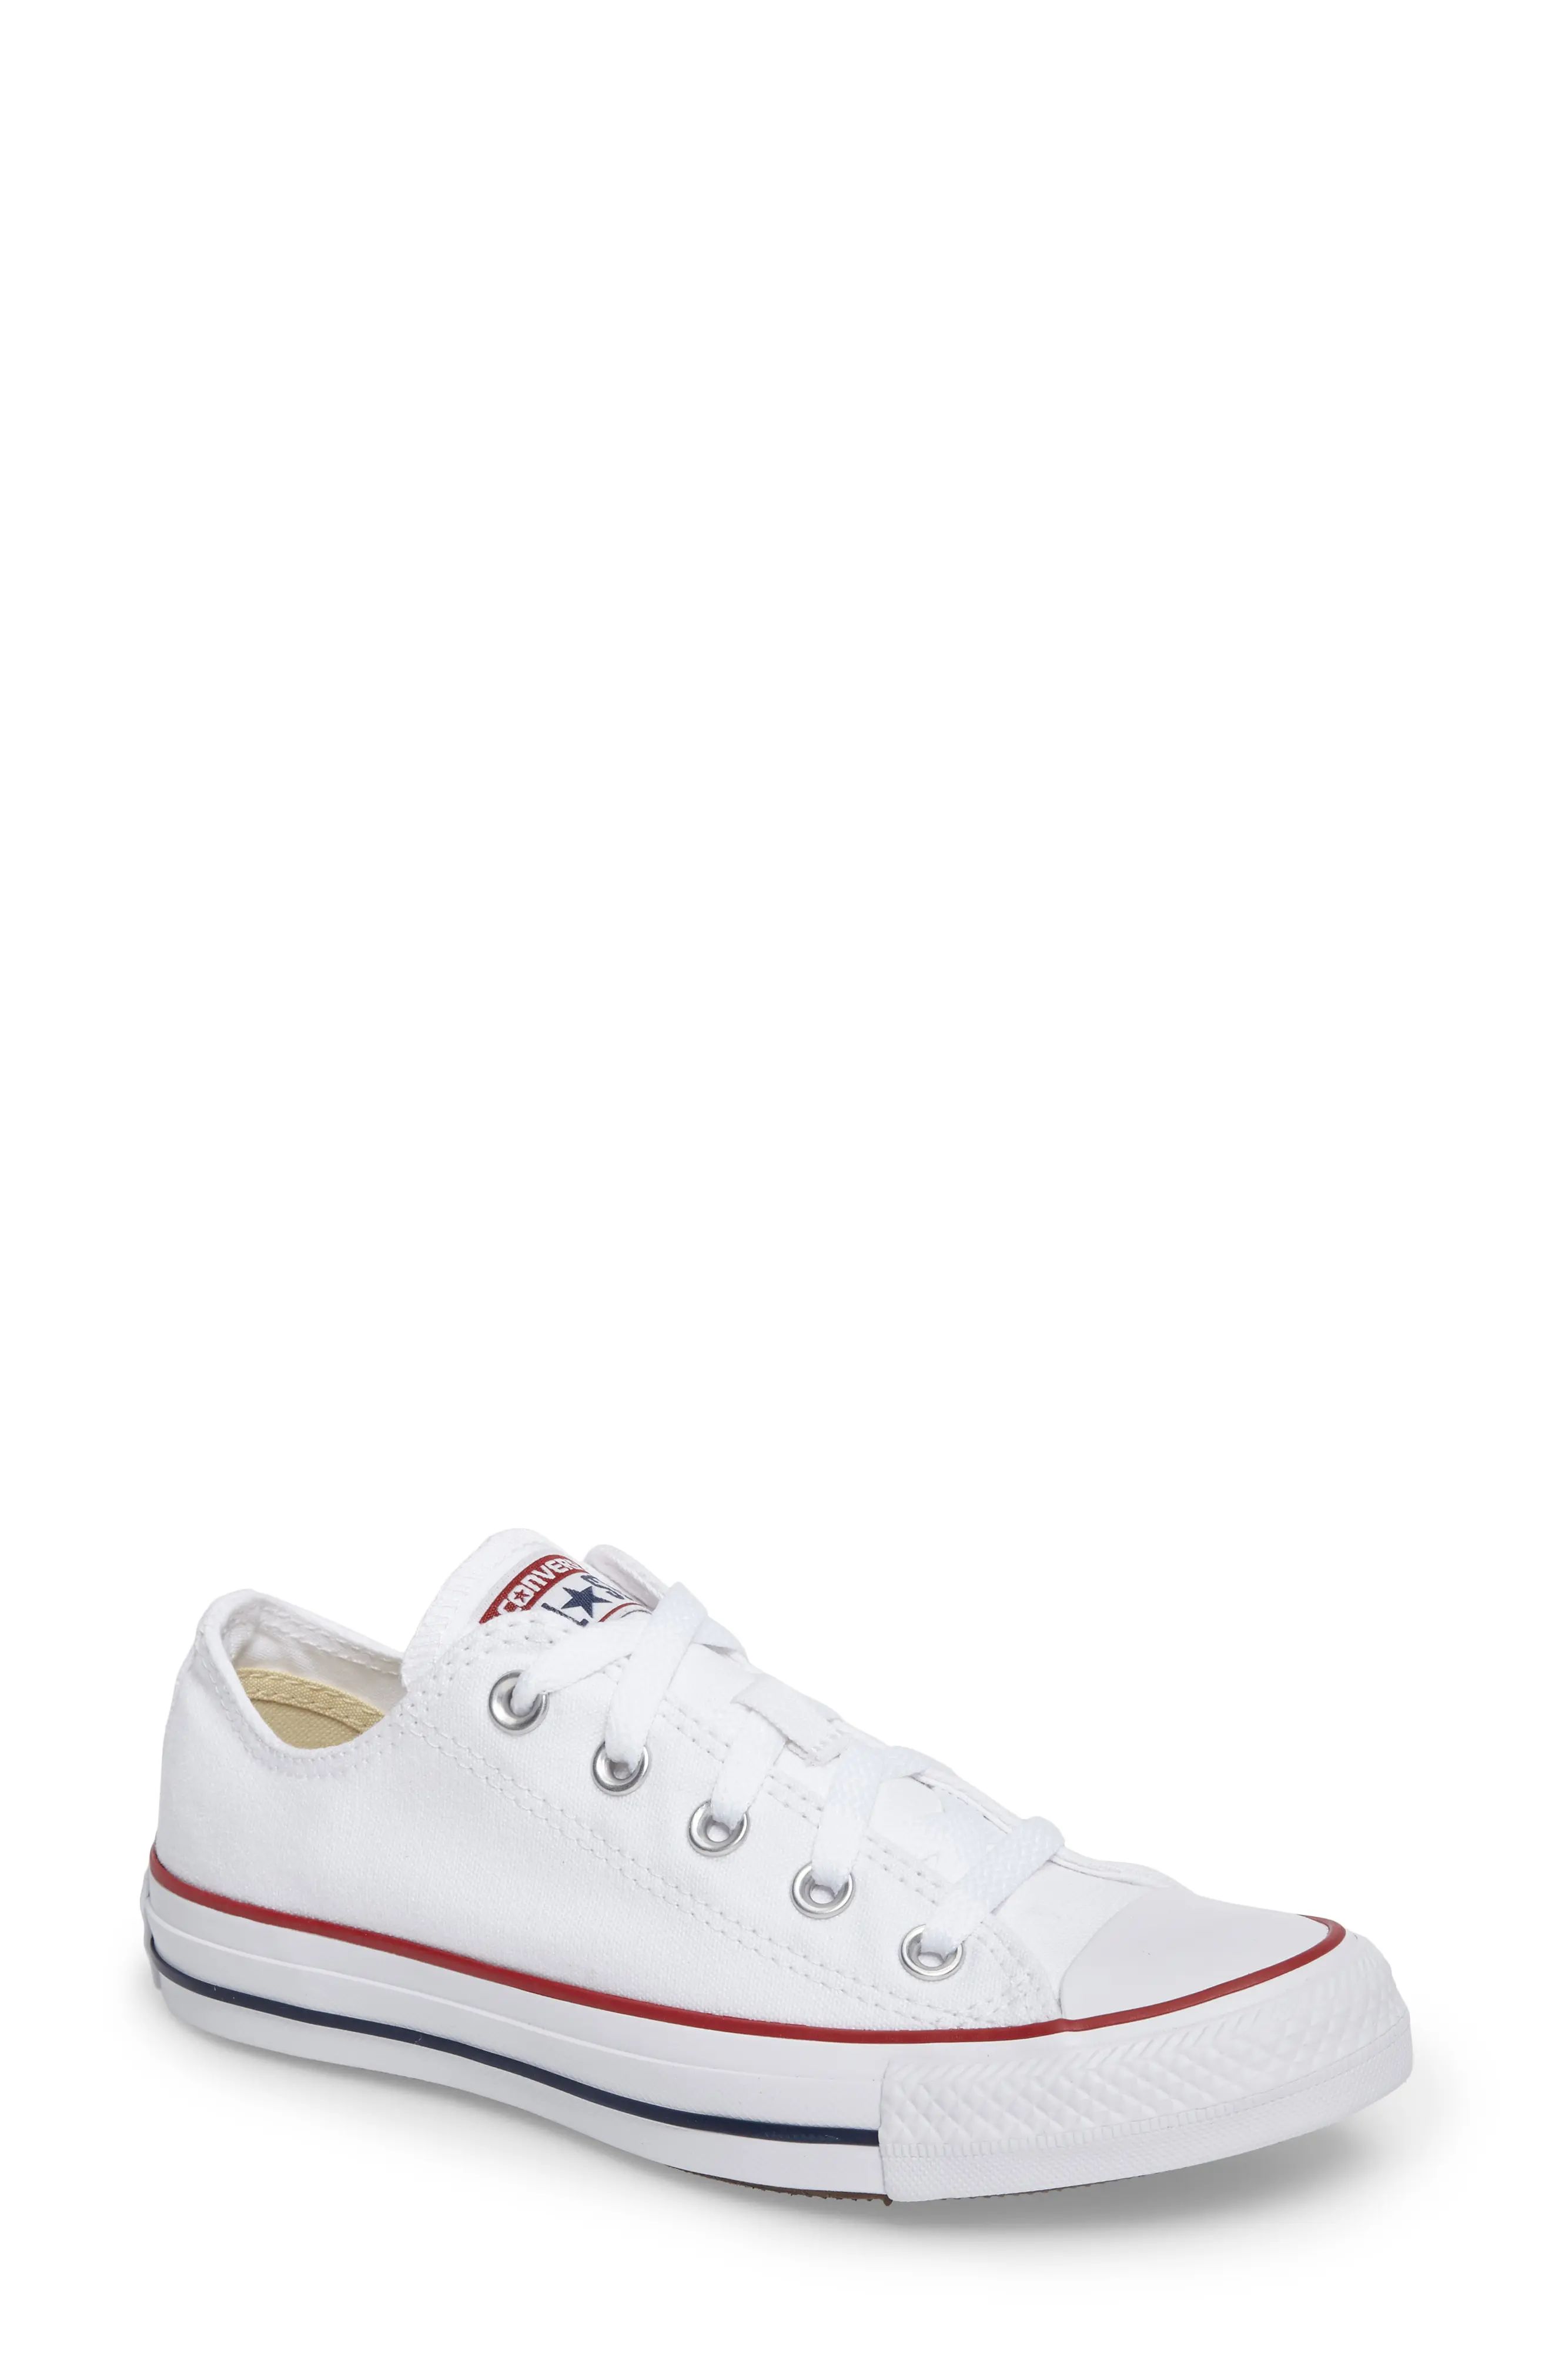 Women's Converse Chuck Taylor Low Top Sneaker, Size 11 M - White | Nordstrom